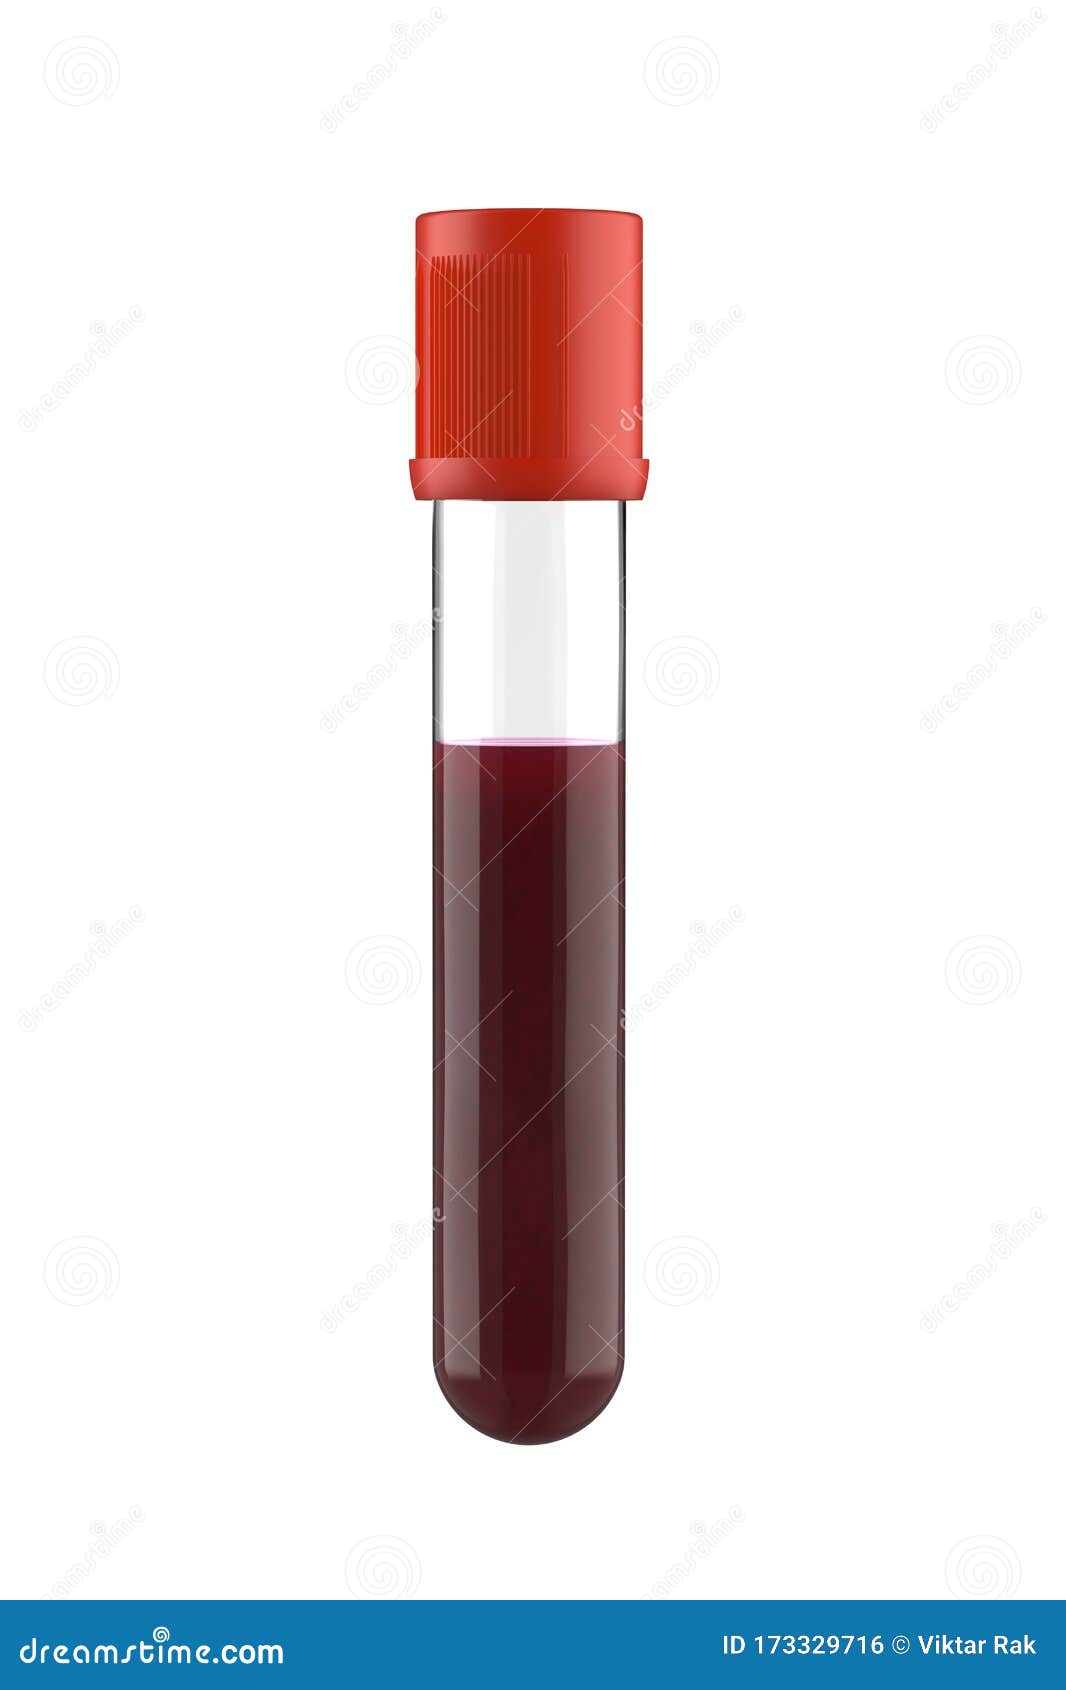 Empty Edta Vacuum Test Tube With Blood Sample Isolated On White Stock Illustration Illustration Of Enzyme Medicine